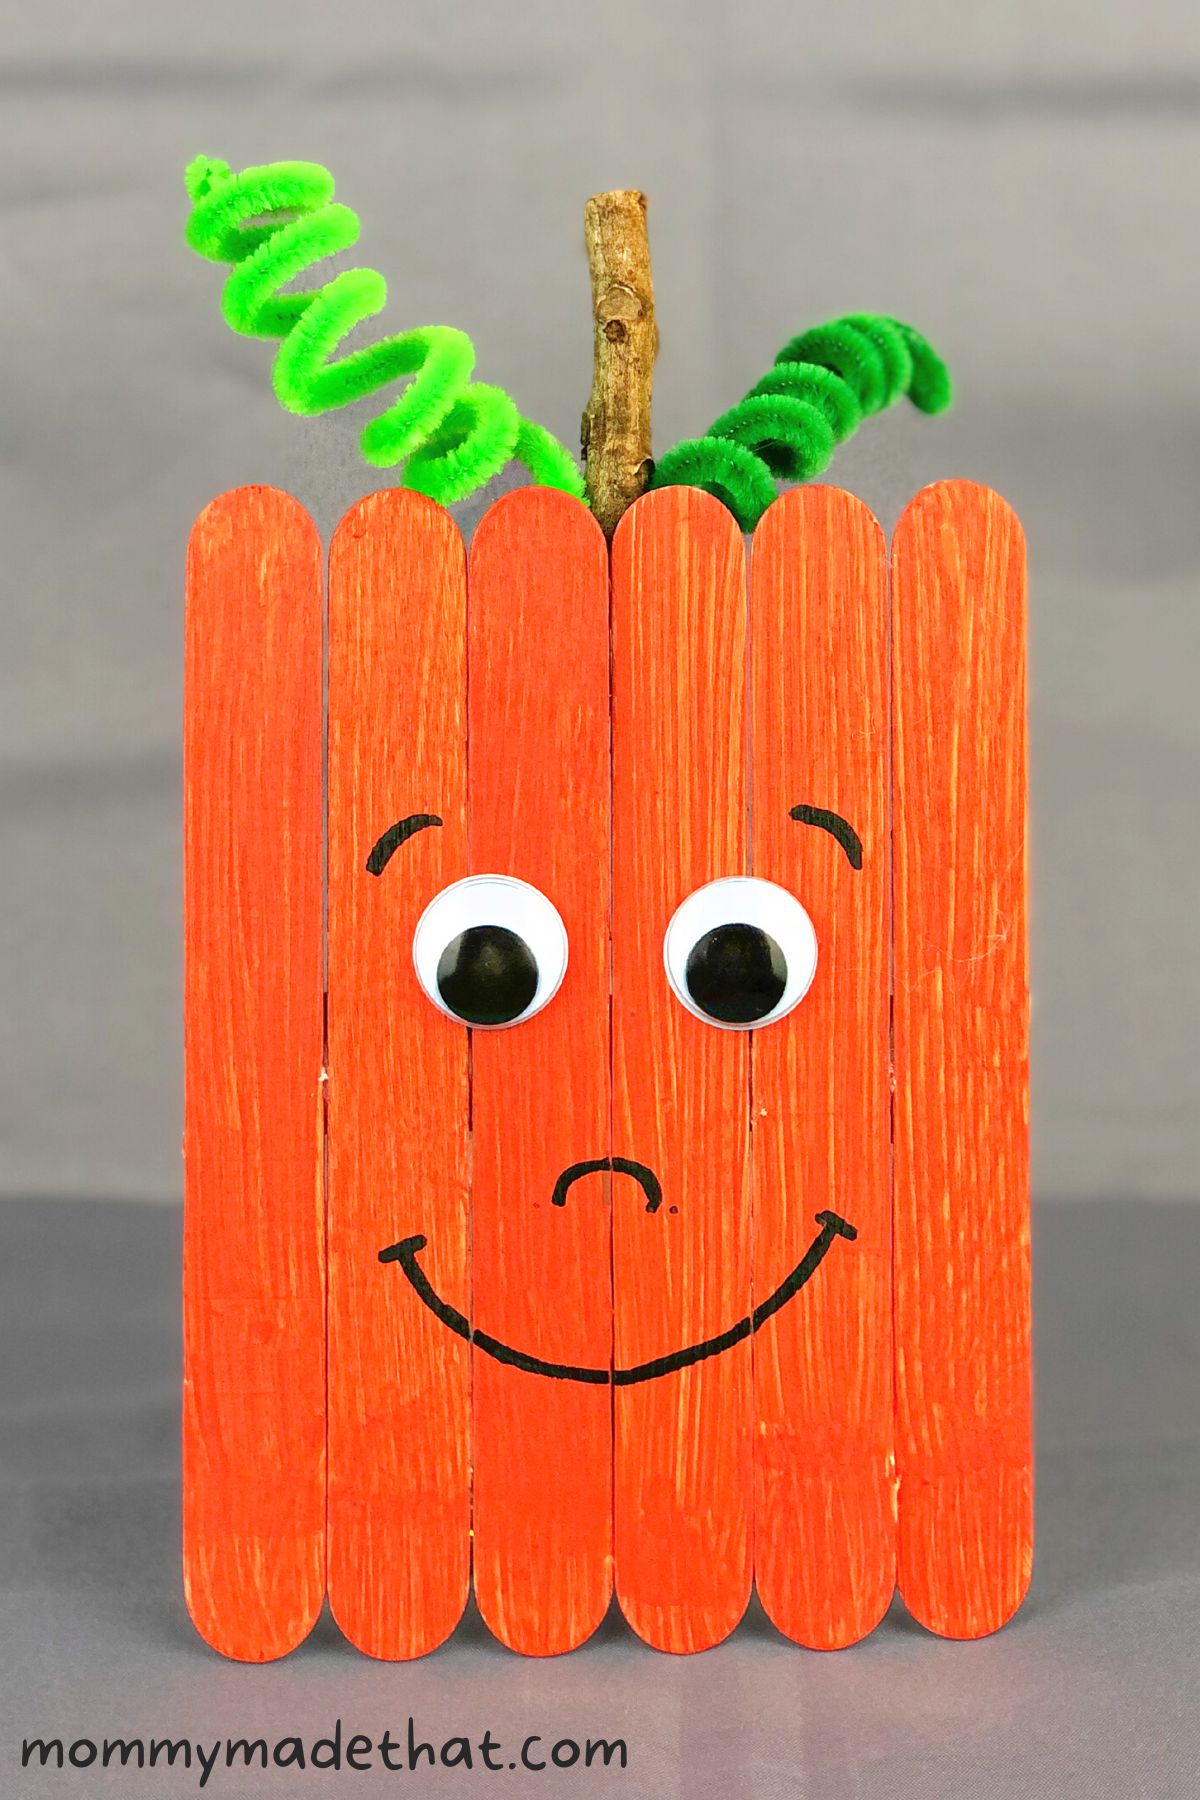 popsicle stick pumpkin craft